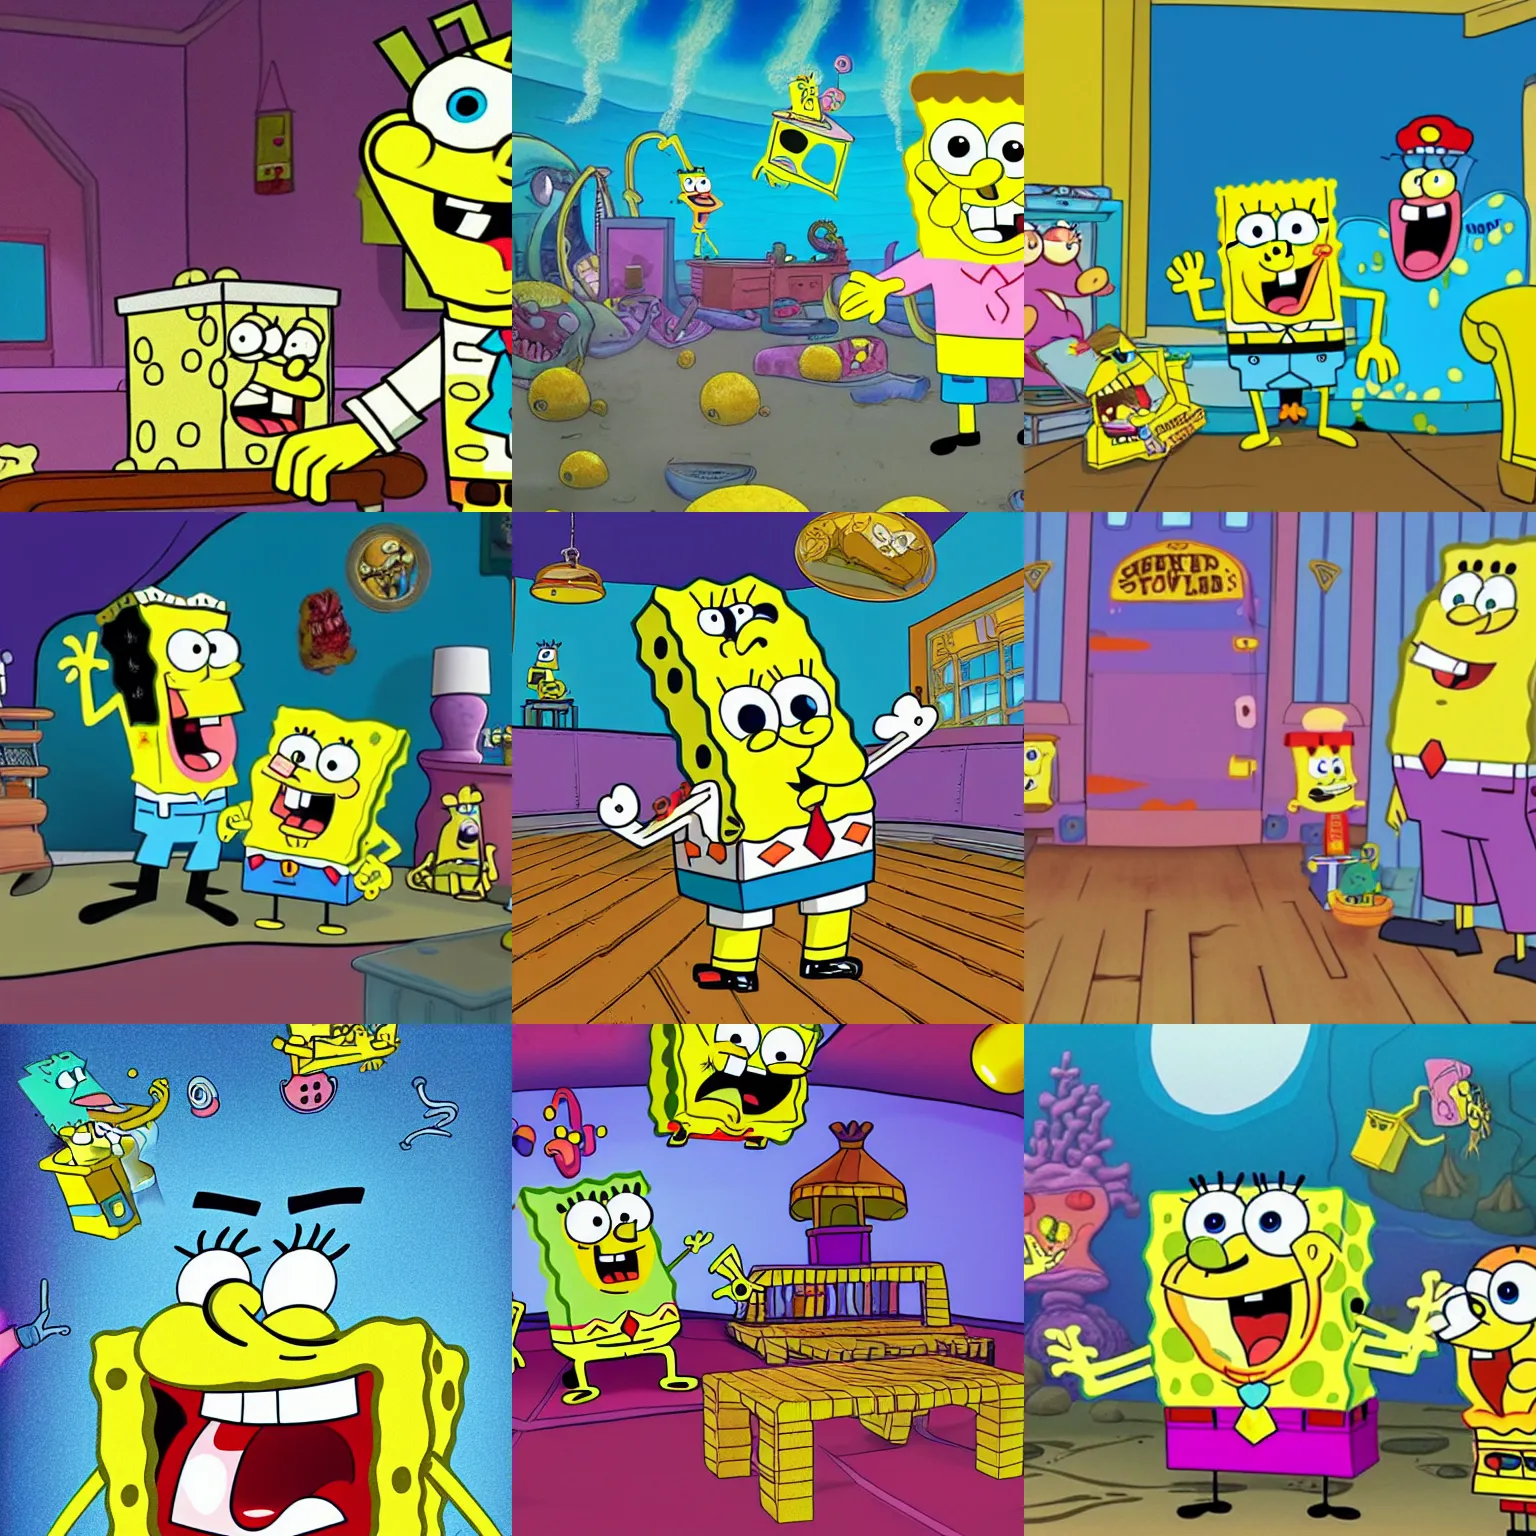 Prompt: an inside of SpongeBob